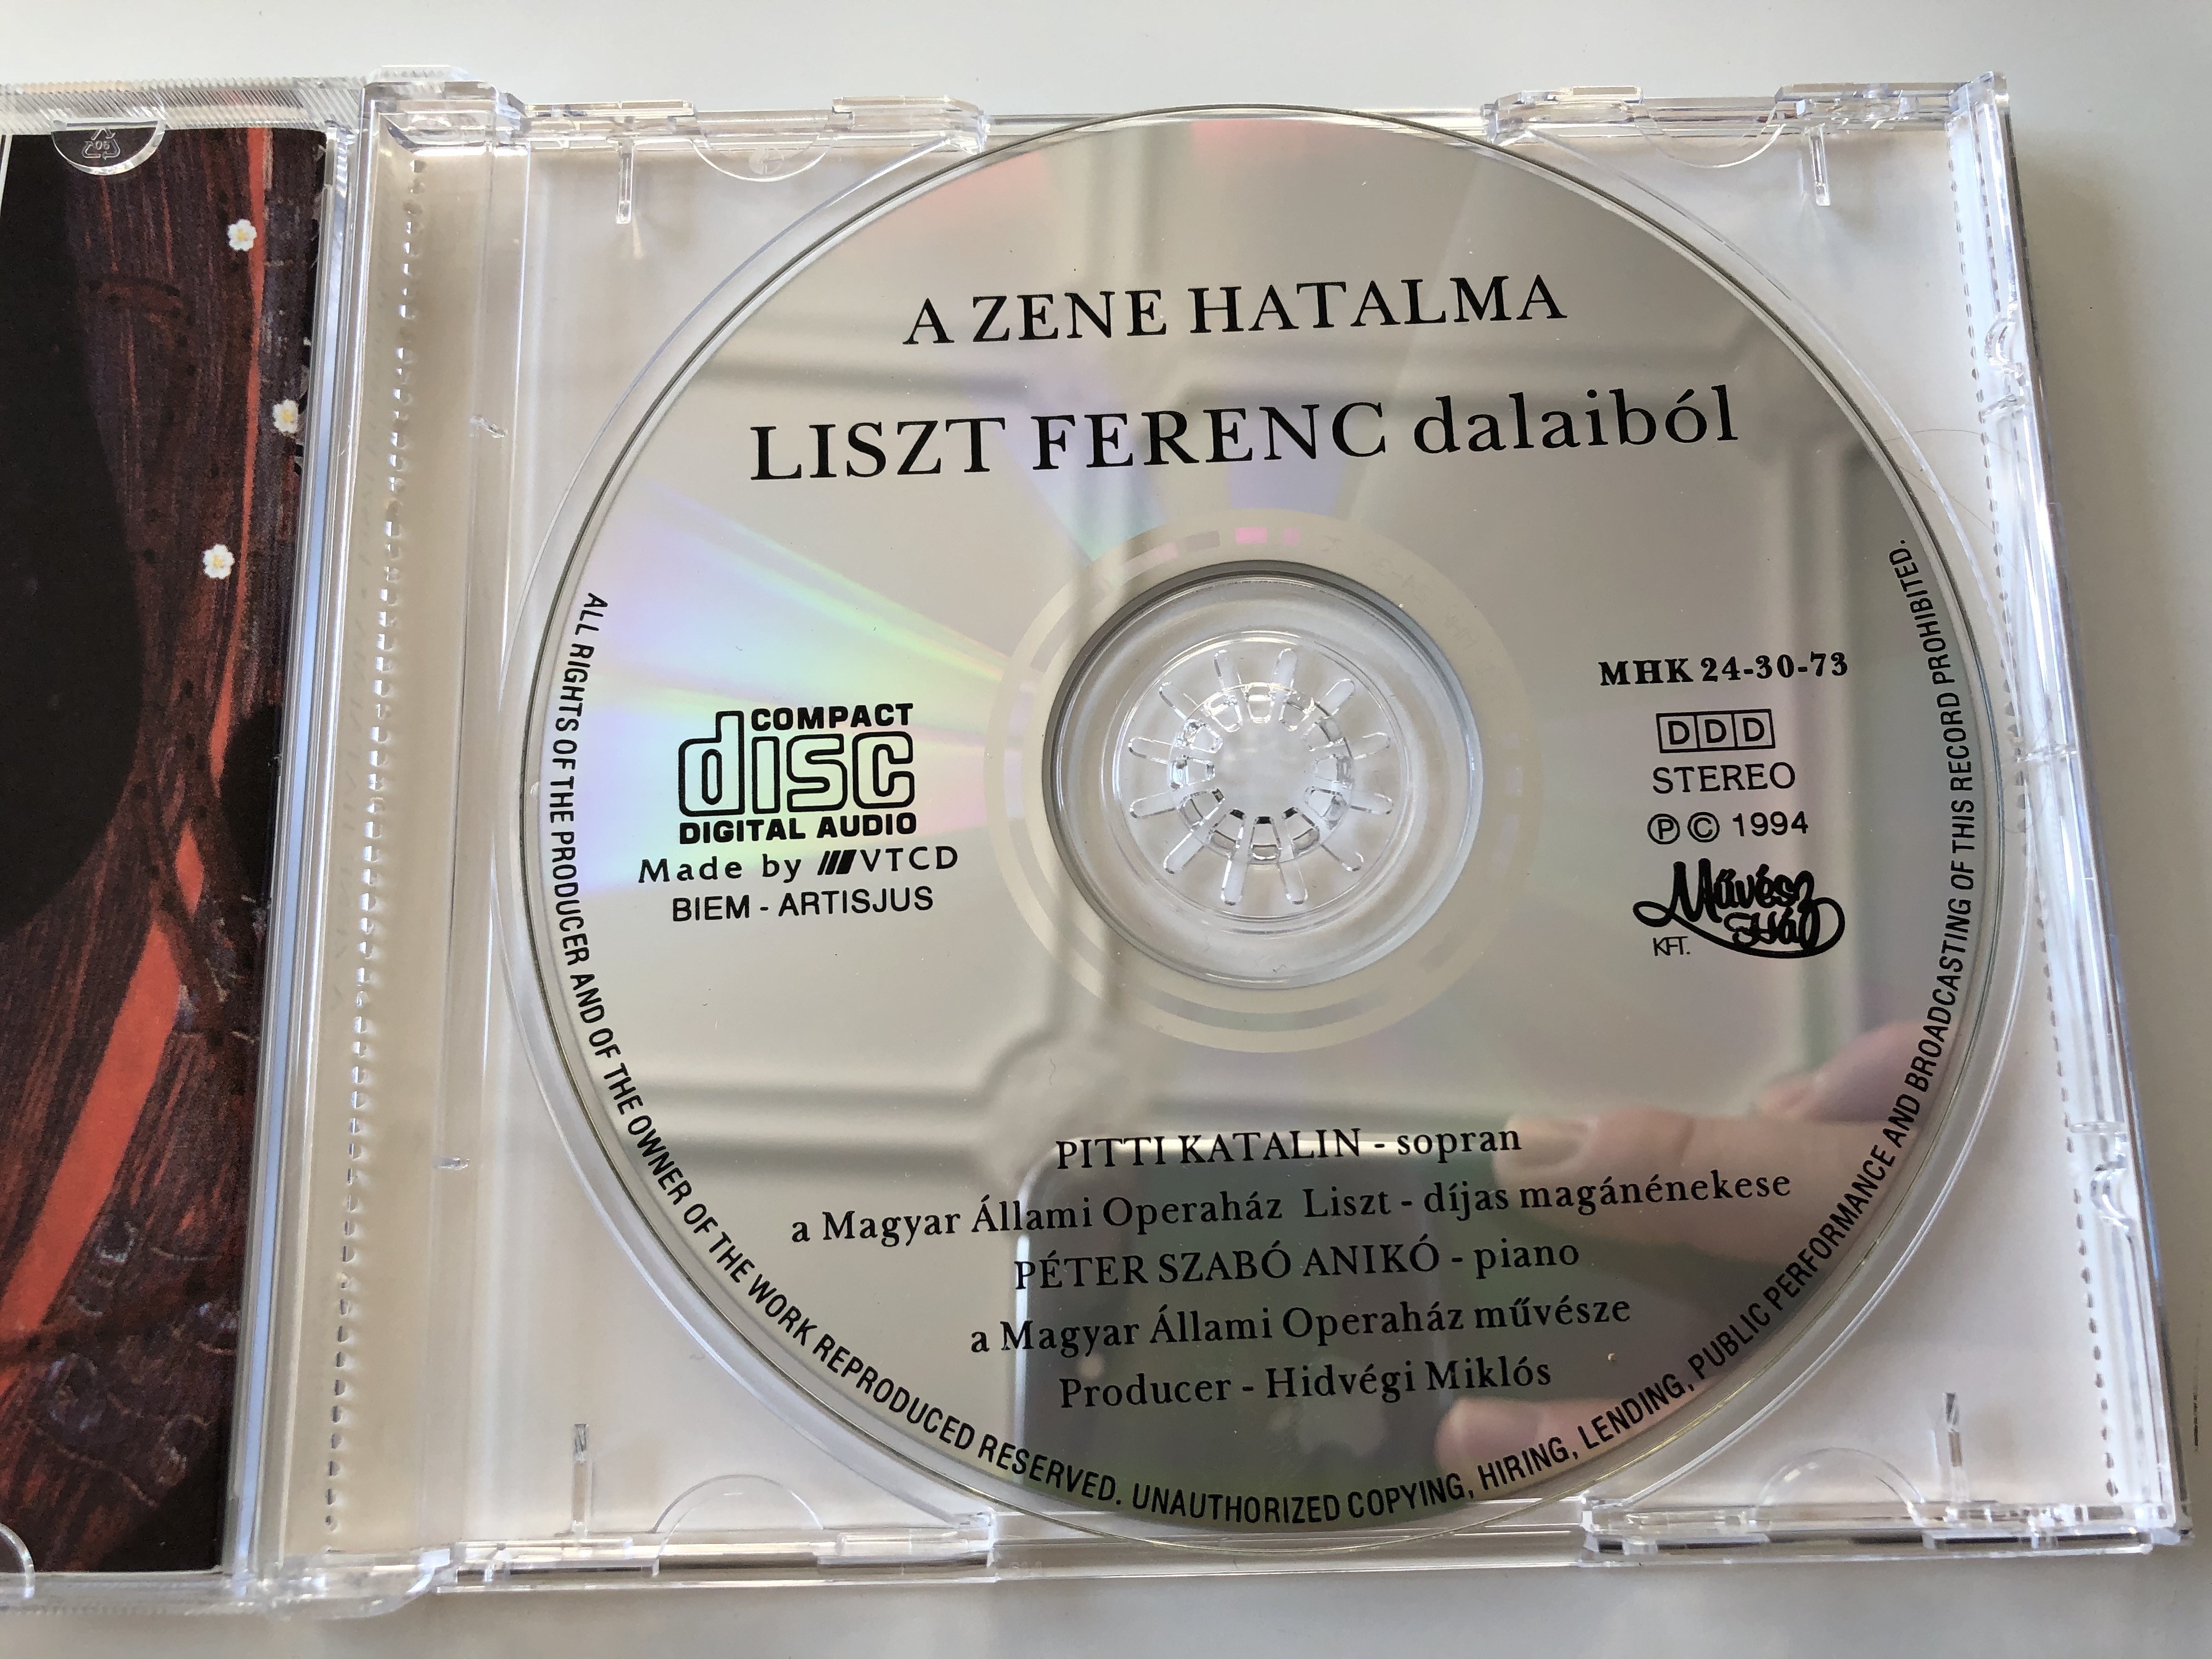 a-zene-hatalma-liszt-ferenc-dalaibol-m-v-sz-h-z-kft-audio-cd-1994-stereo-mhk-24-30-73-8-.jpg